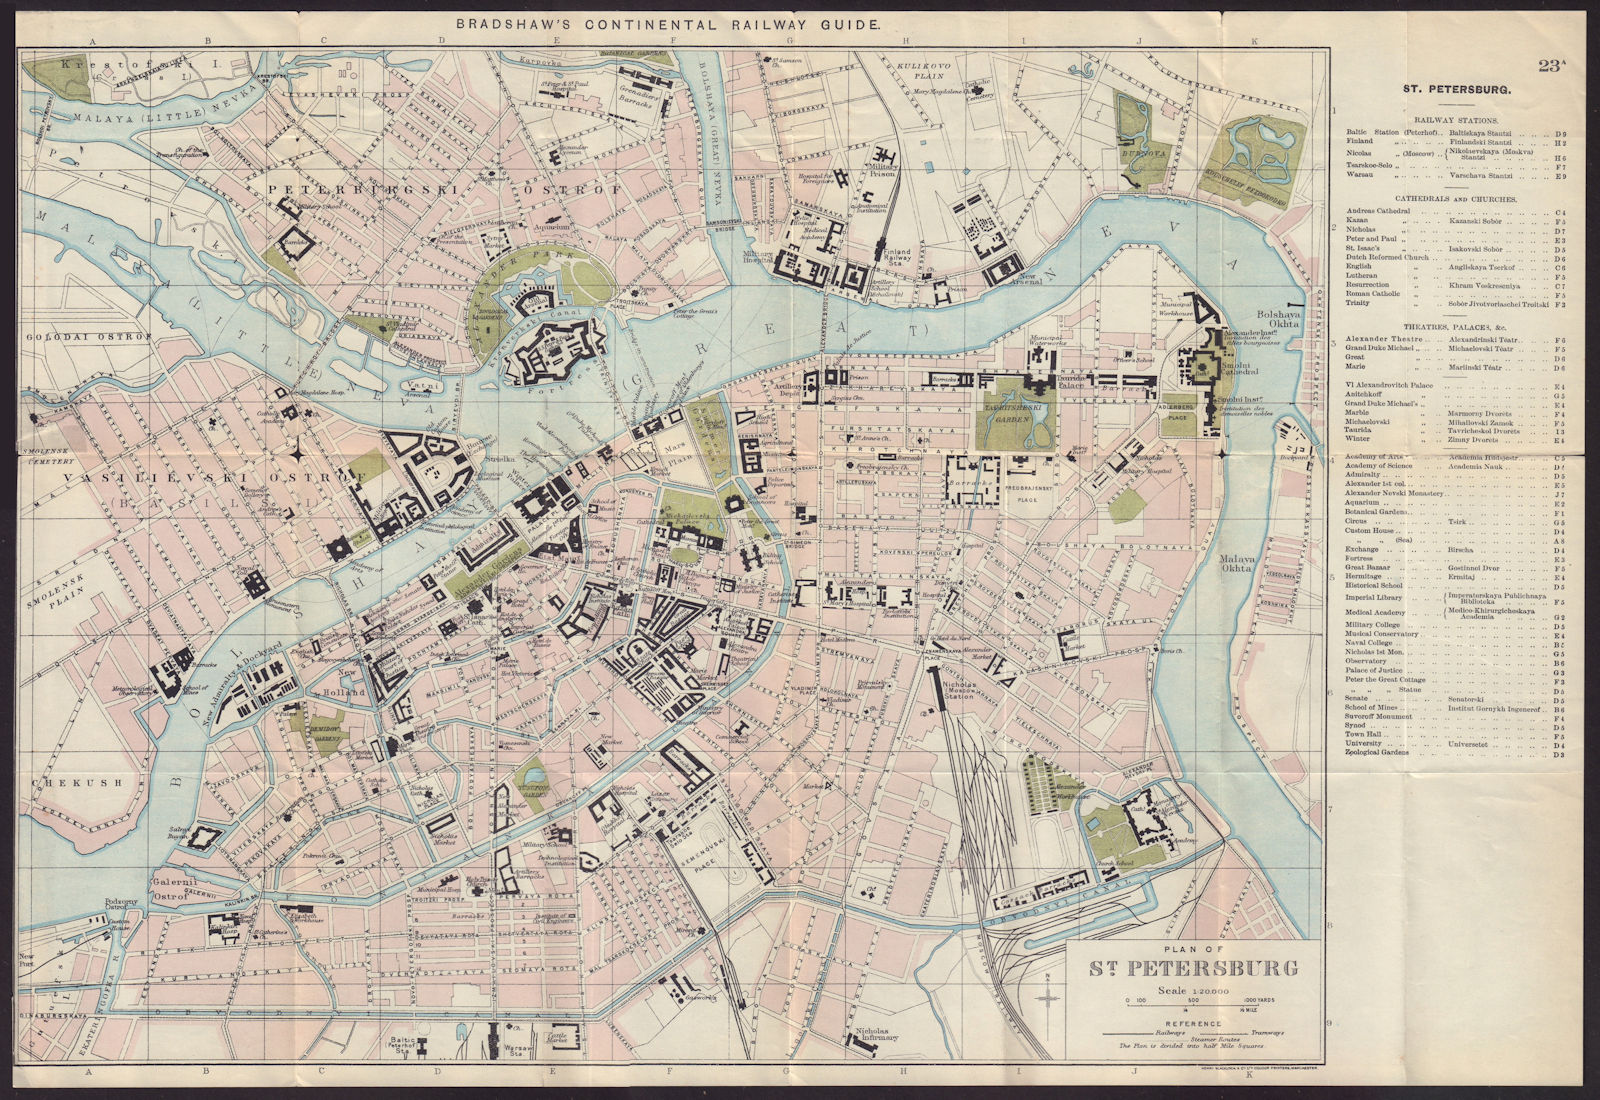 ST. PETERSBURG antique town plan city map. Russia. BRADSHAW c1898 old